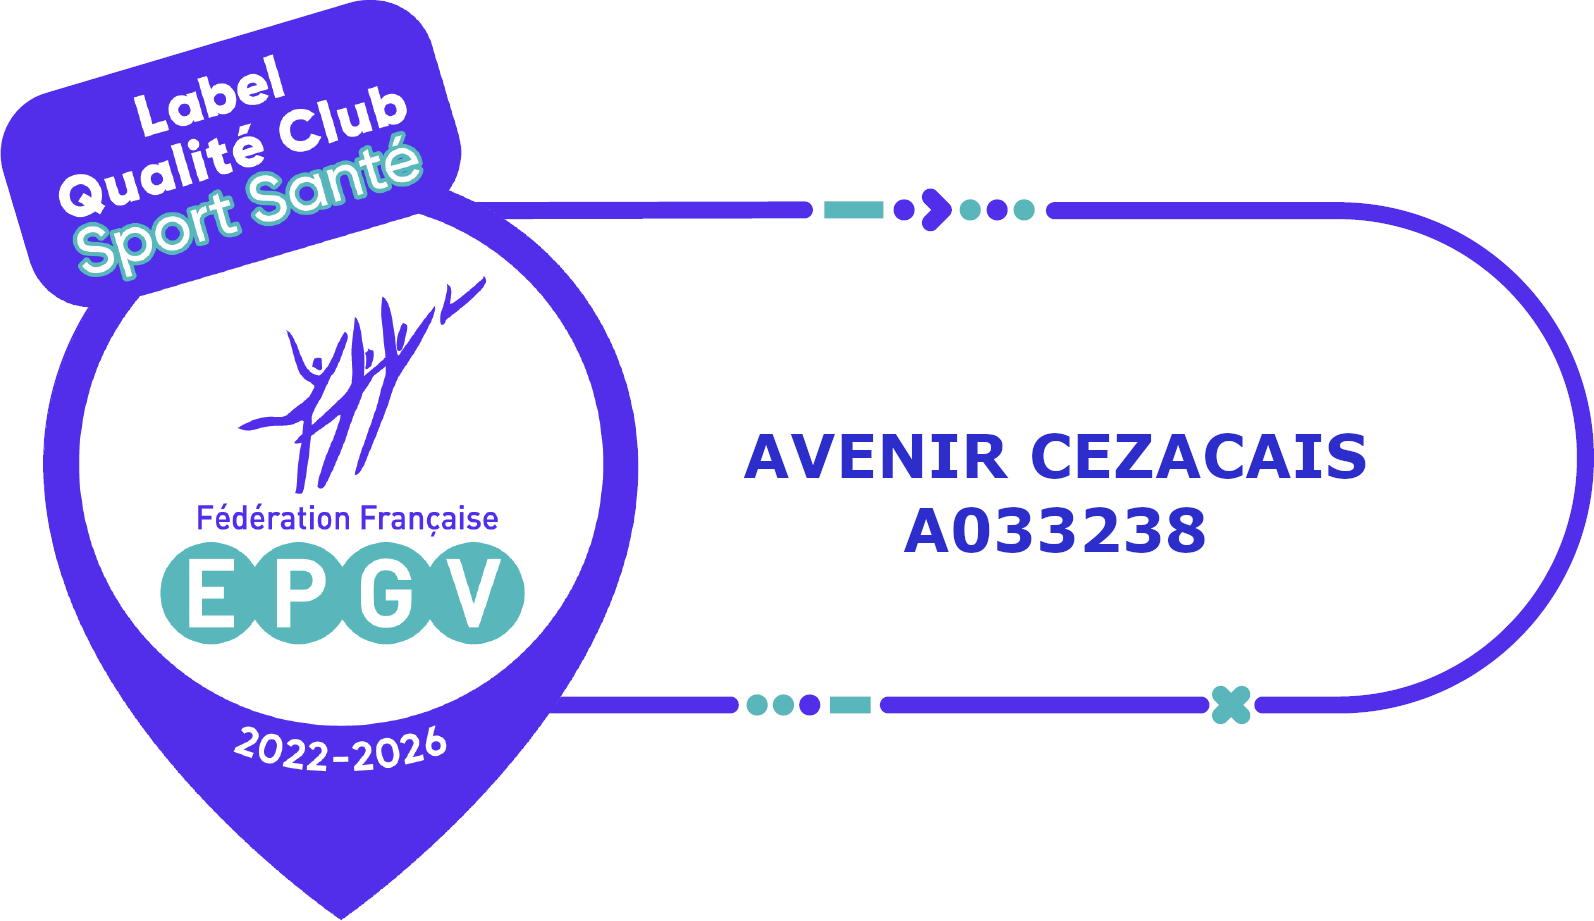 Logo-Label-Qualité-Club-C-A033238-22-26 _1_.JPEG